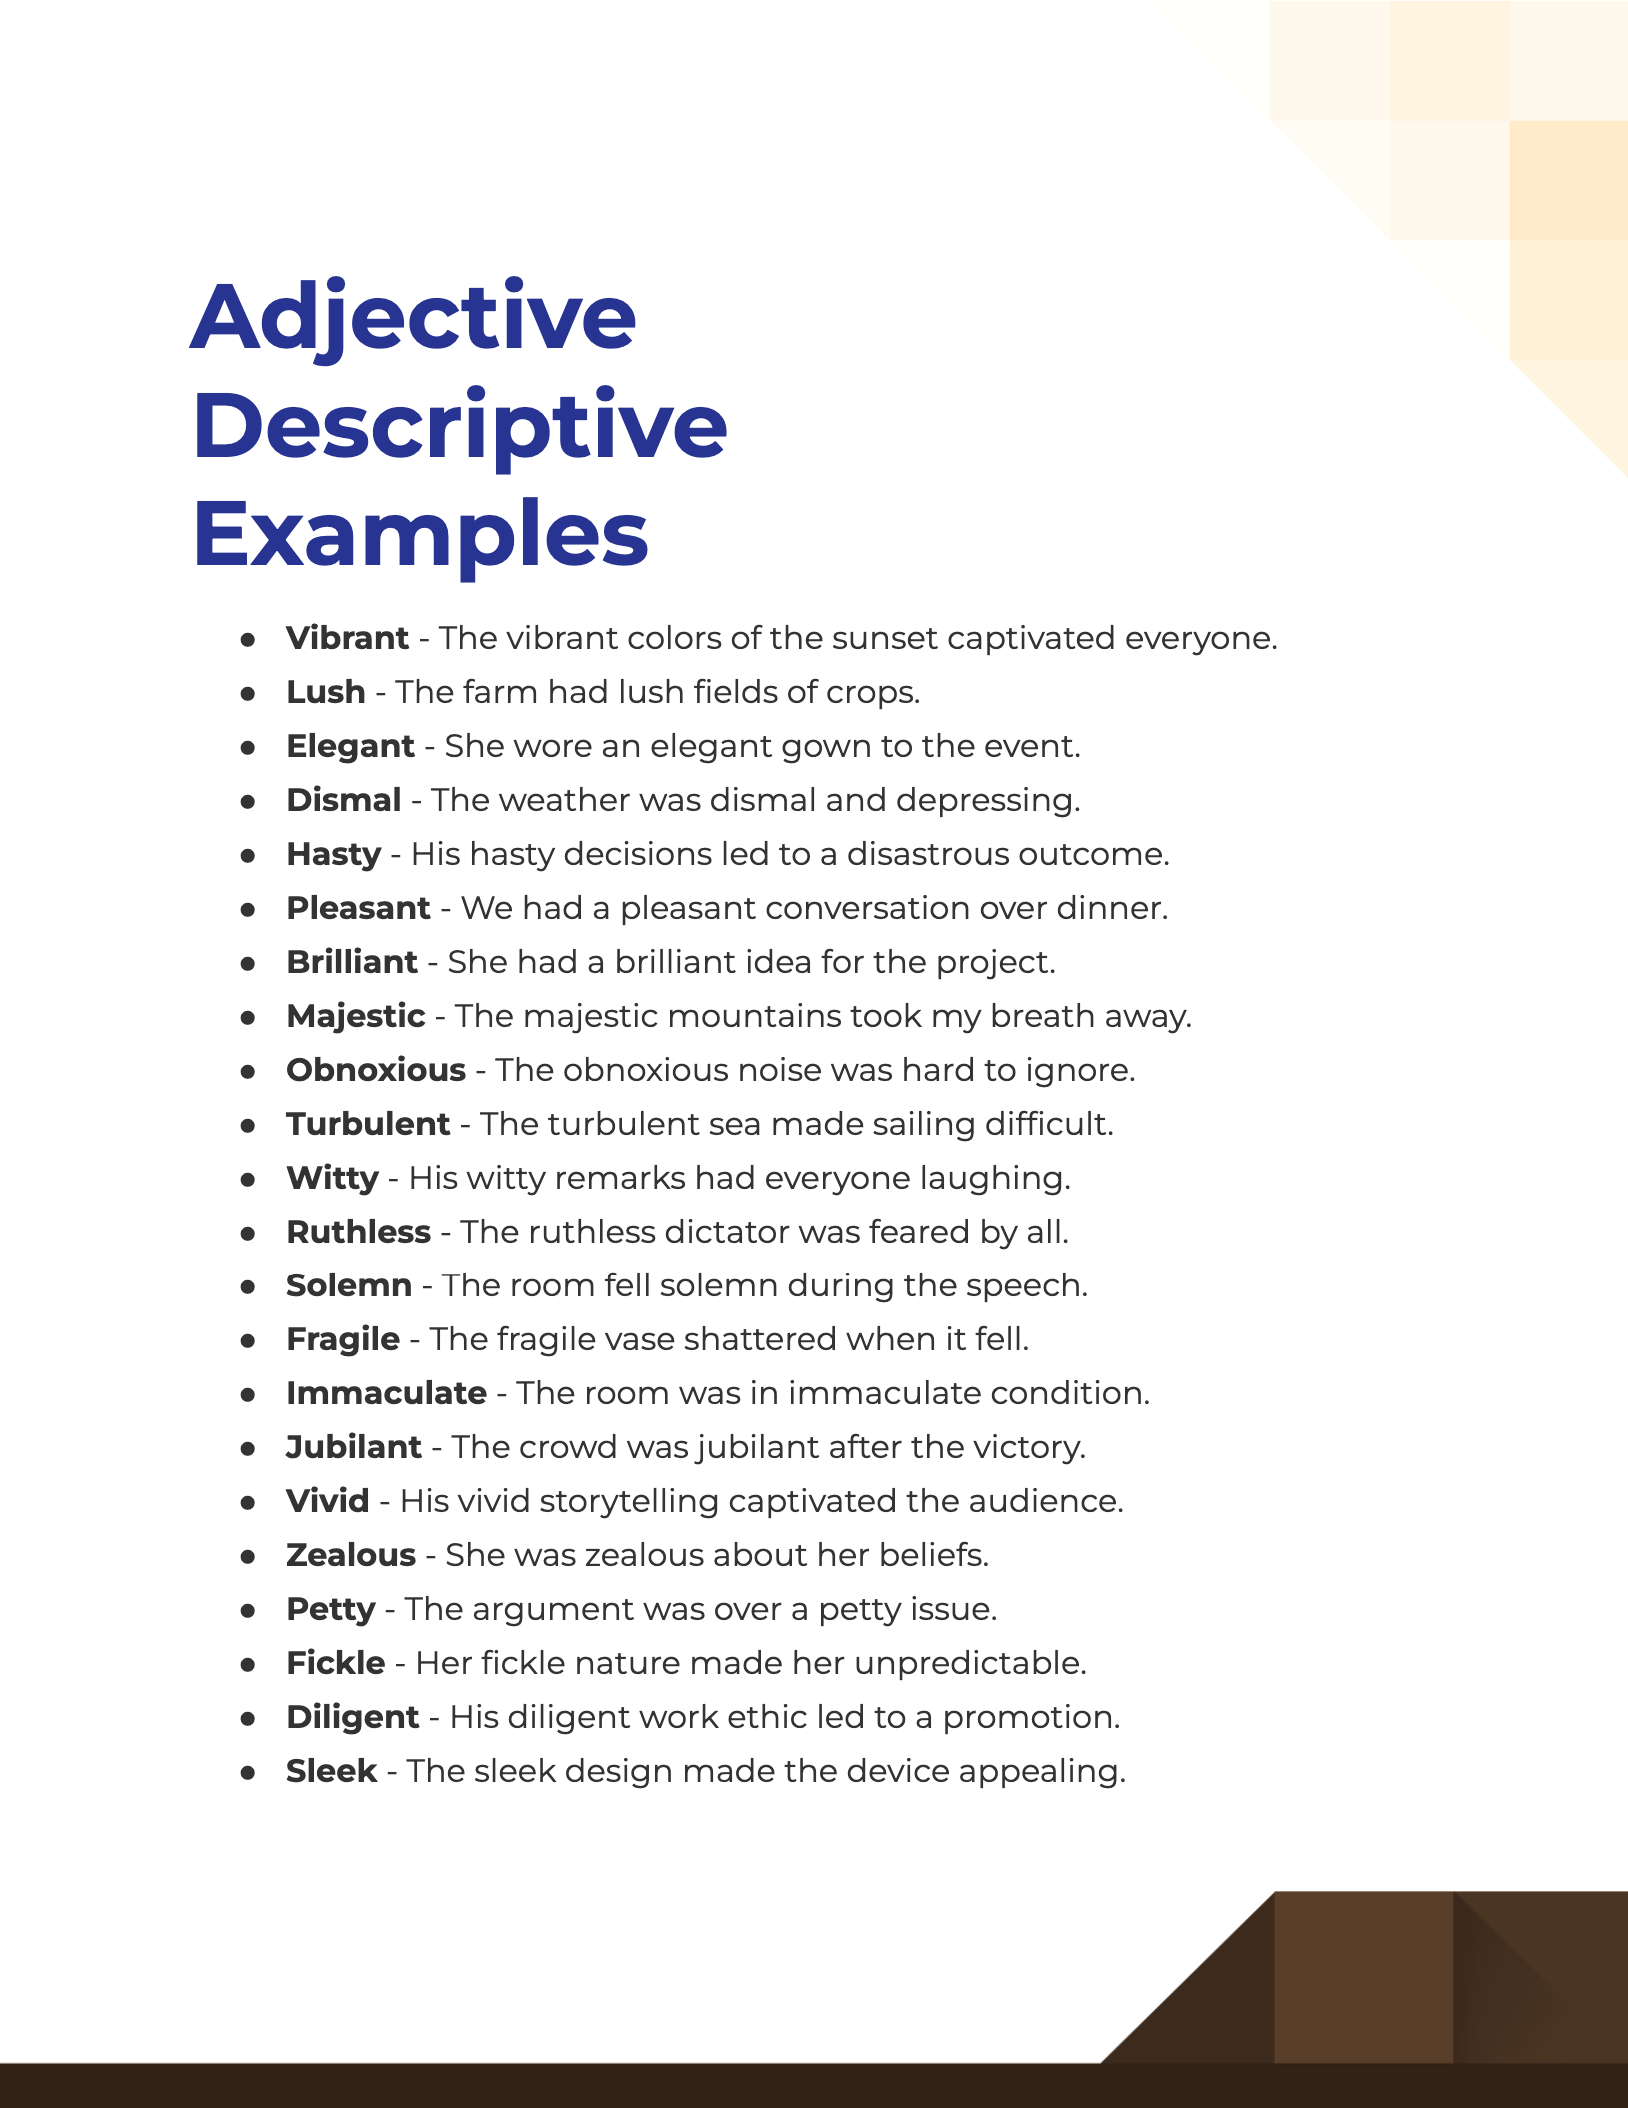 adjective descriptive examples1